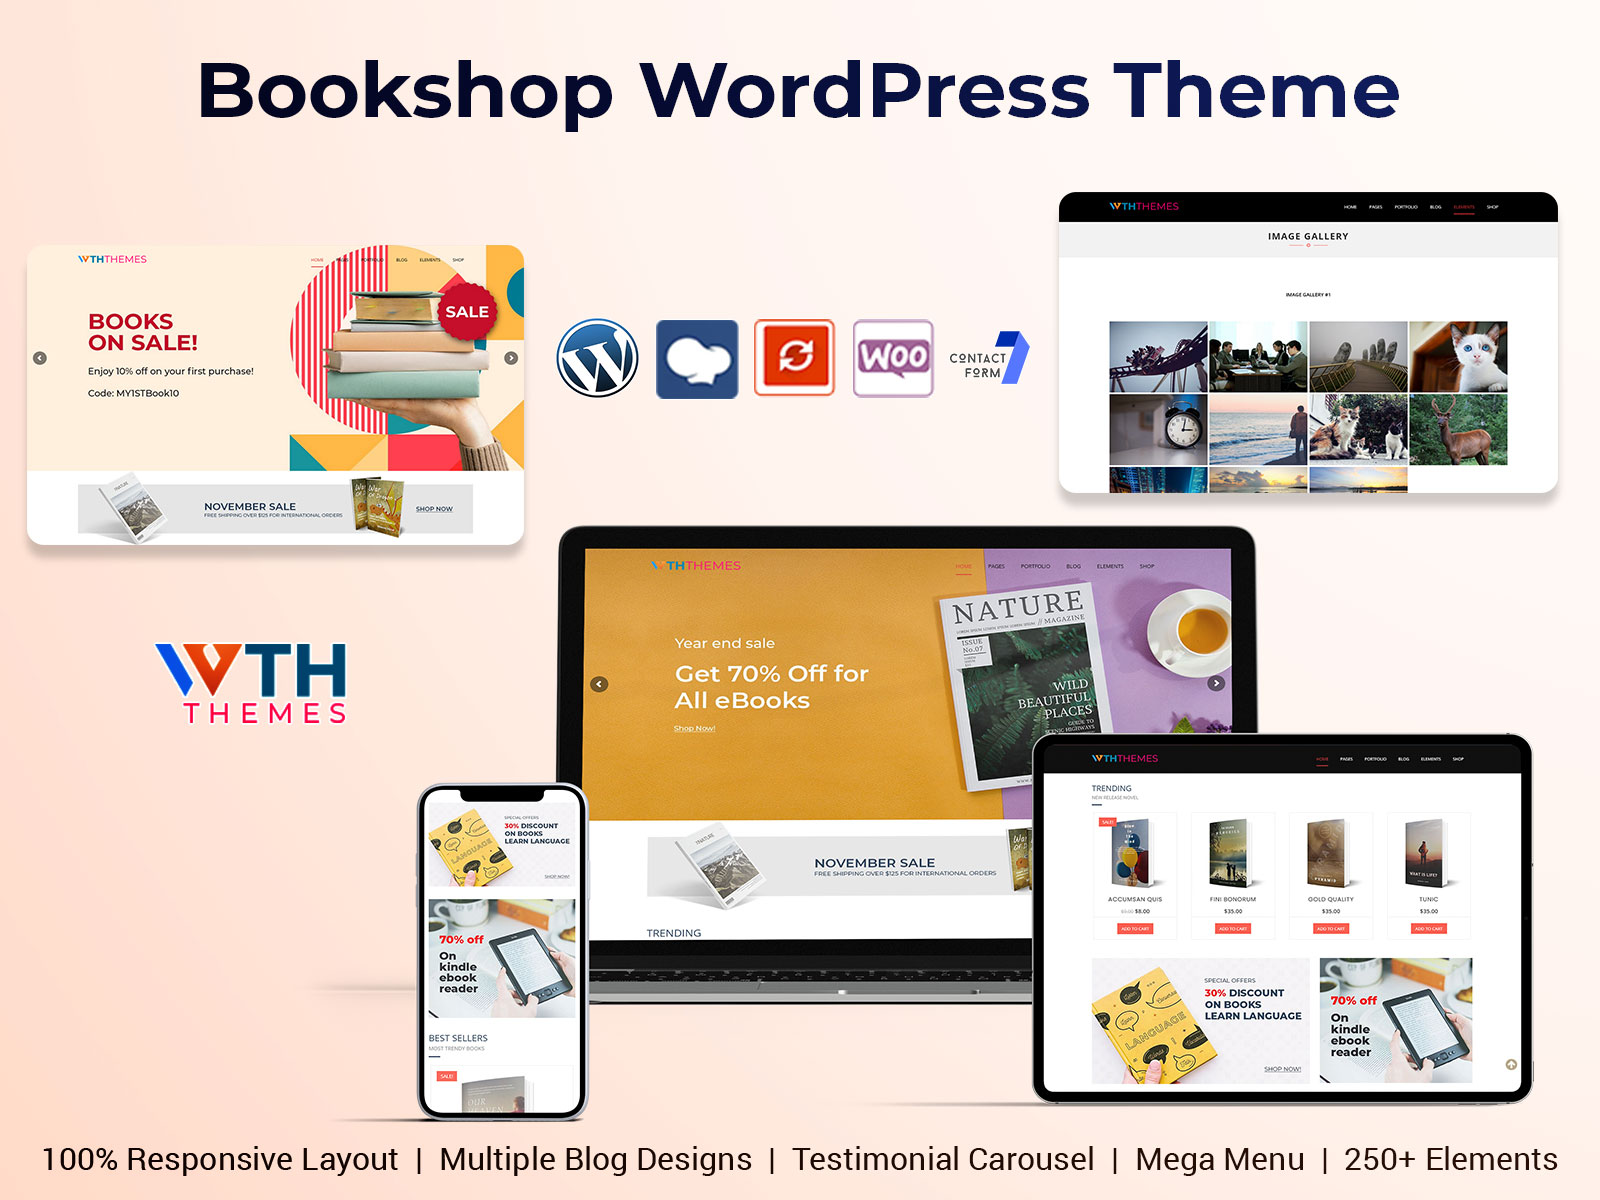 Best Bookshop WordPress Theme For Selling Books Online